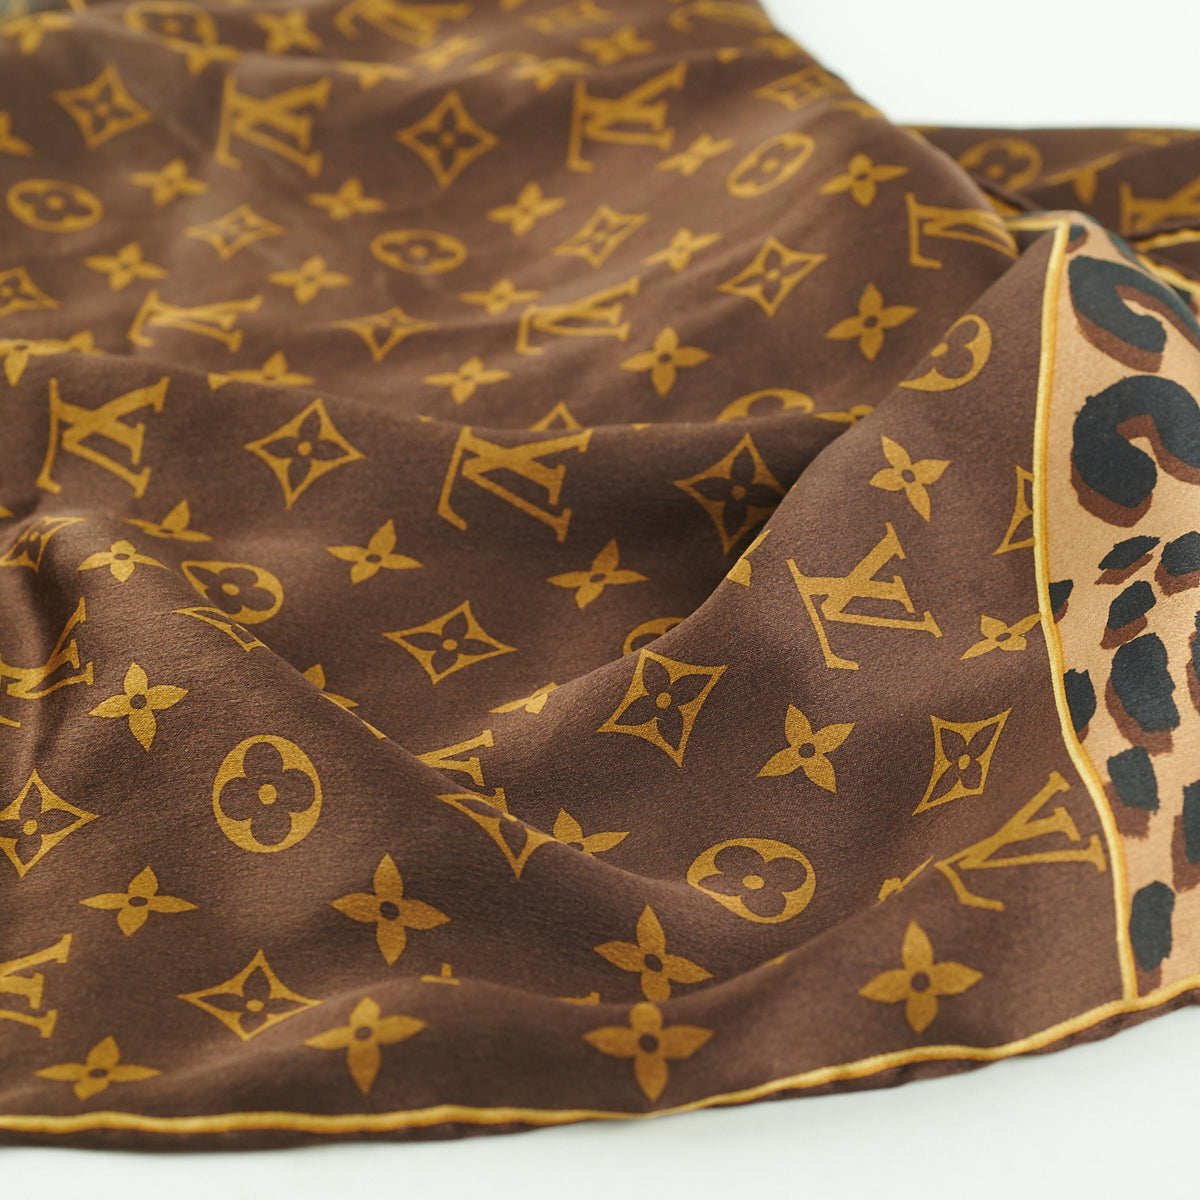 Louis Vuitton scarf monogram leopard 100% silk M72124 65 x 65 cm with box  ladies